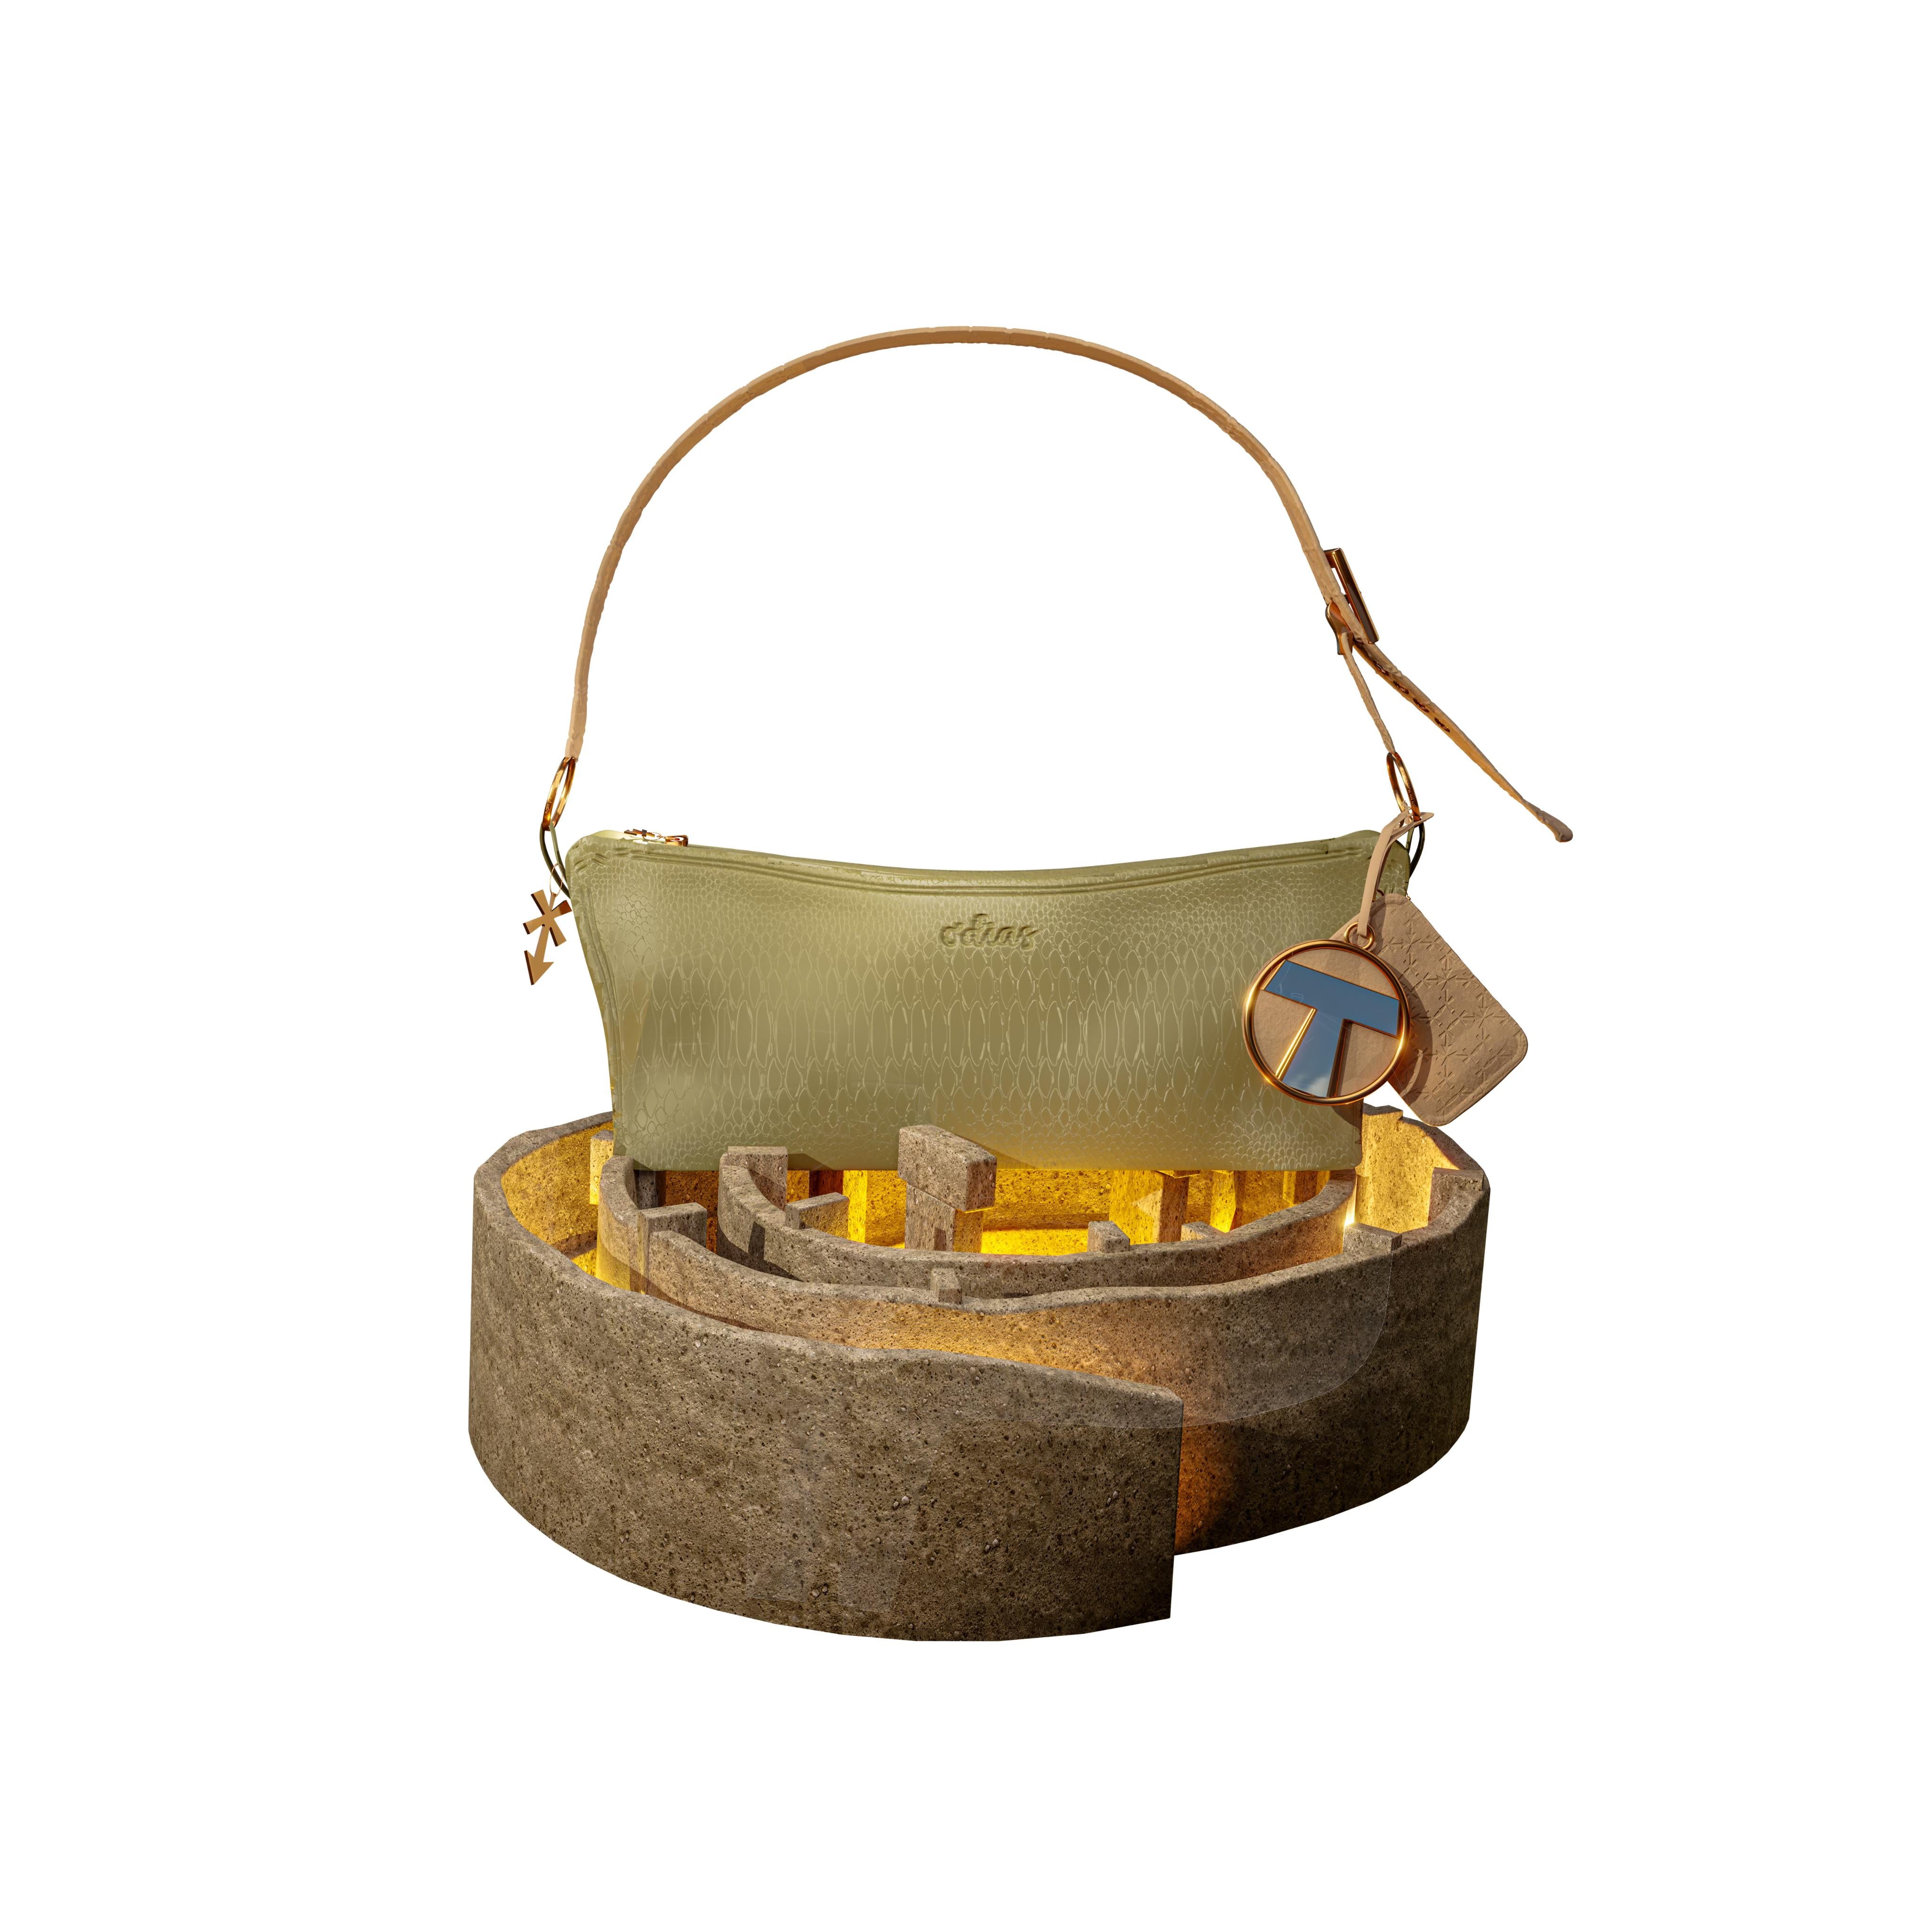 Own the Stela Çanta, a Tasarım Çanta echoing Göbeklitepe's Antik essence. A tribute to the world's first handbag, crafted in T-shape elegance.